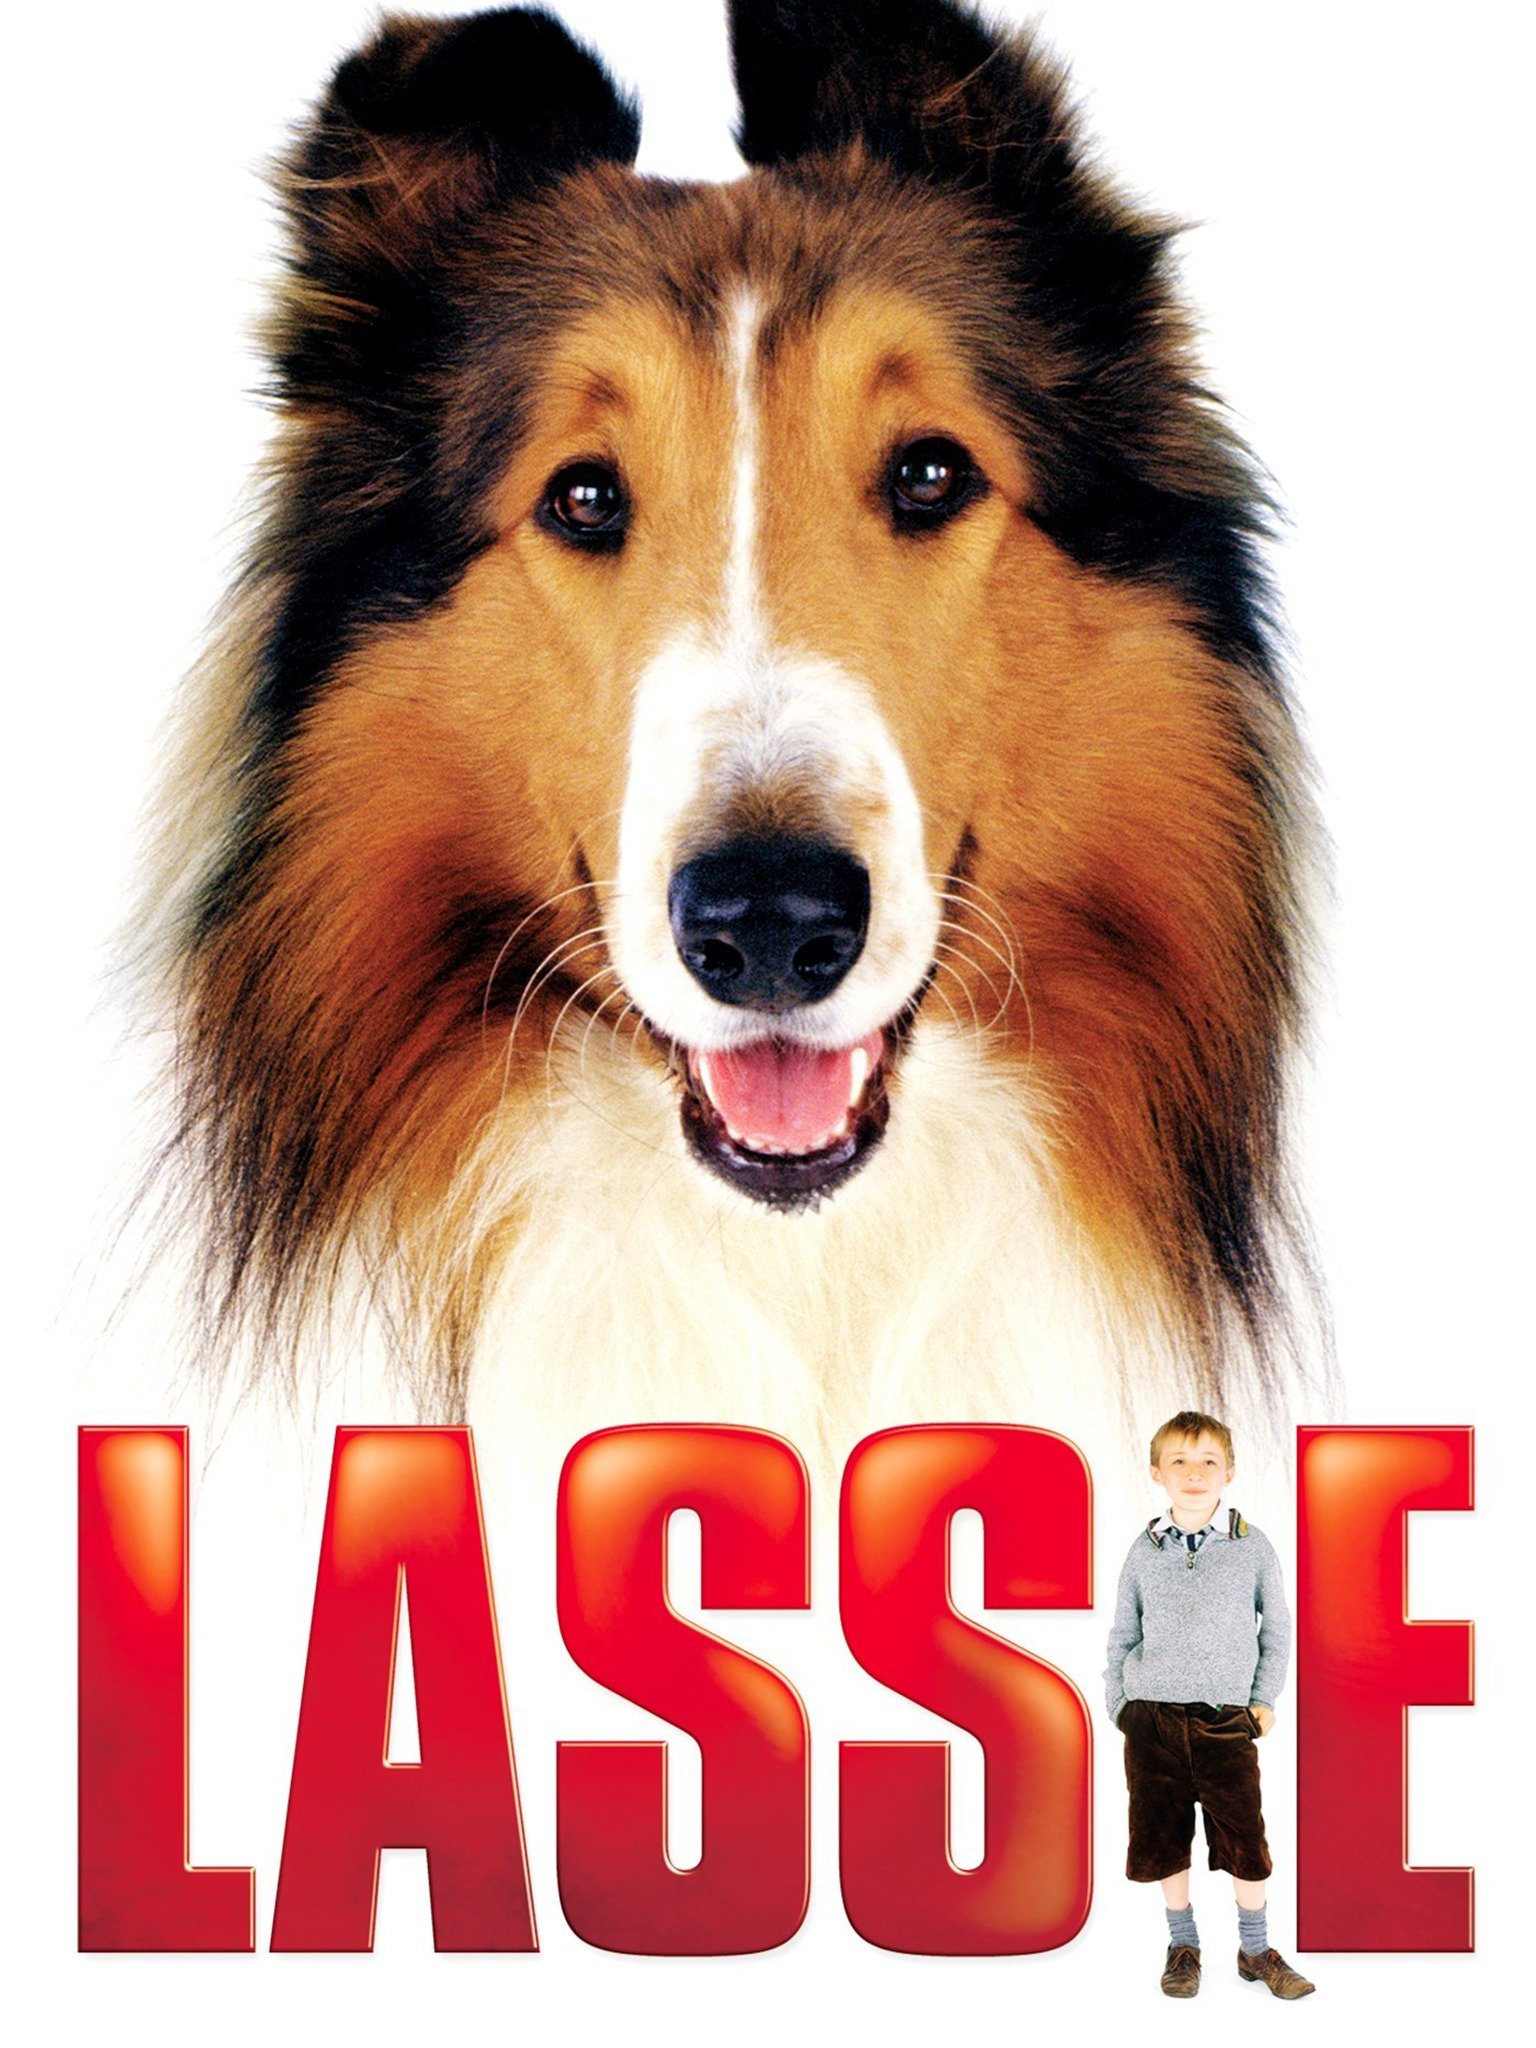 Lassie (Dog), Big Nate Wiki